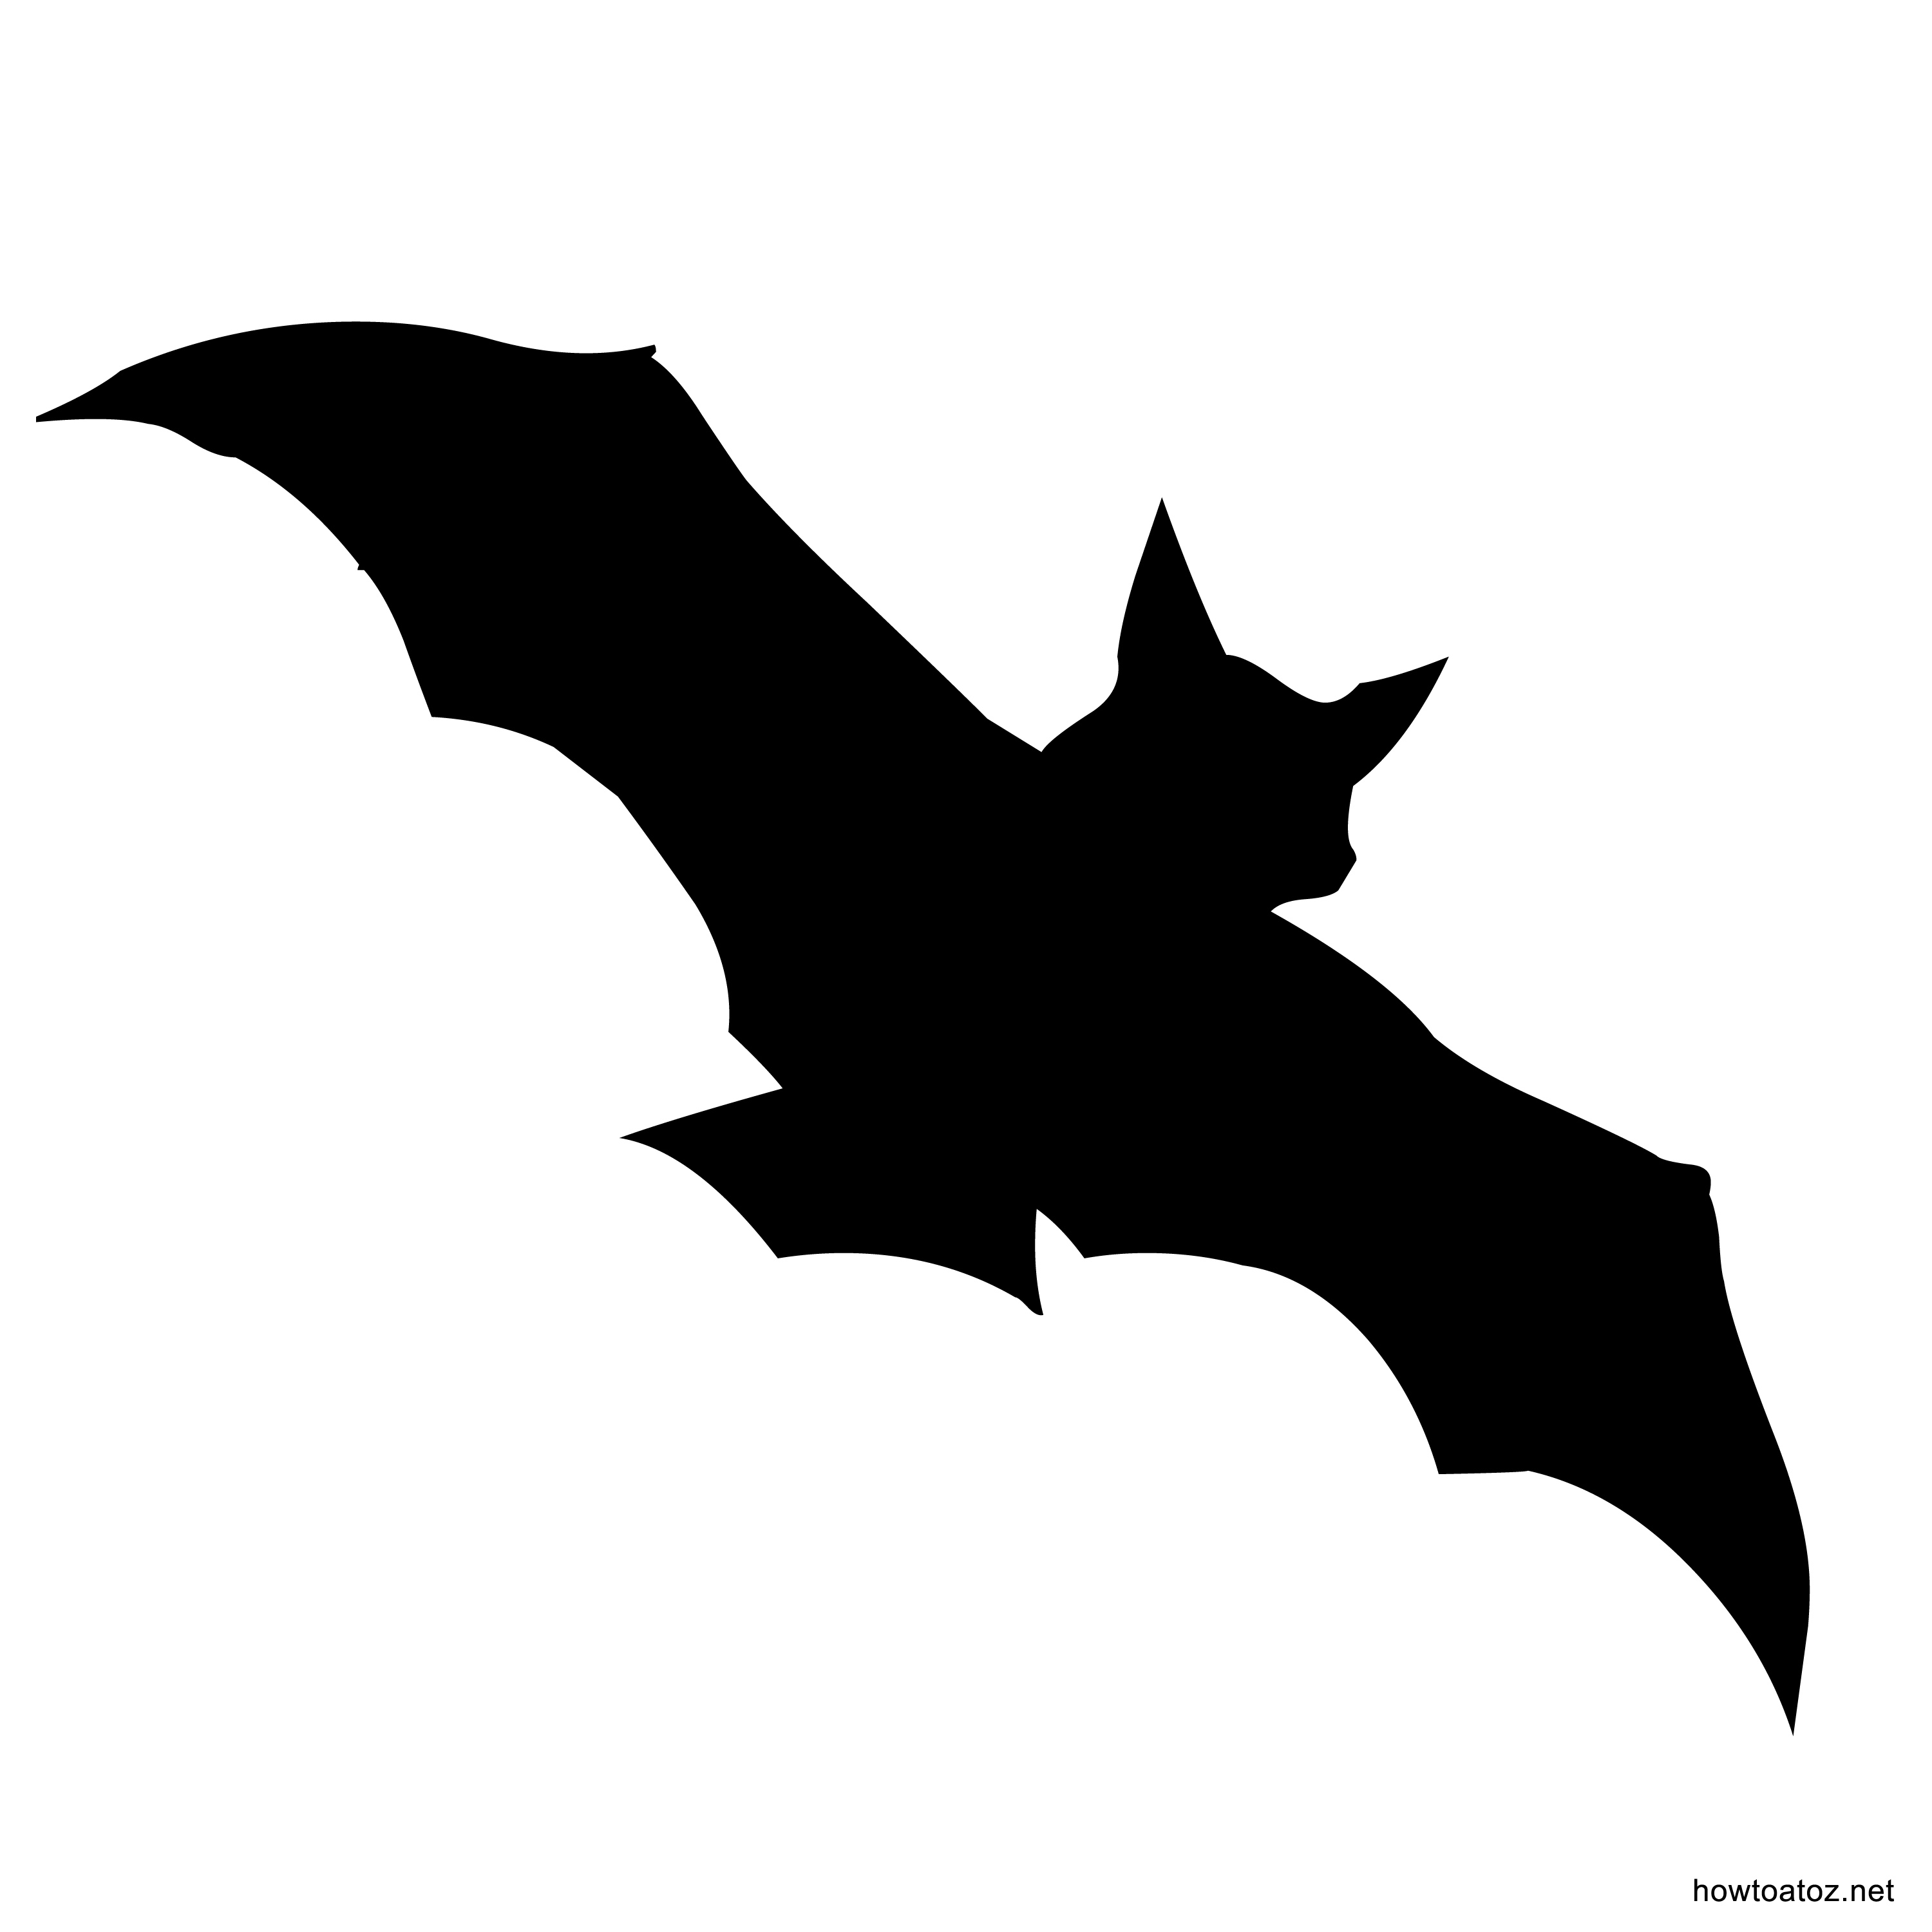 Halloween silhouette at getdrawings. Bats clipart spooky bat